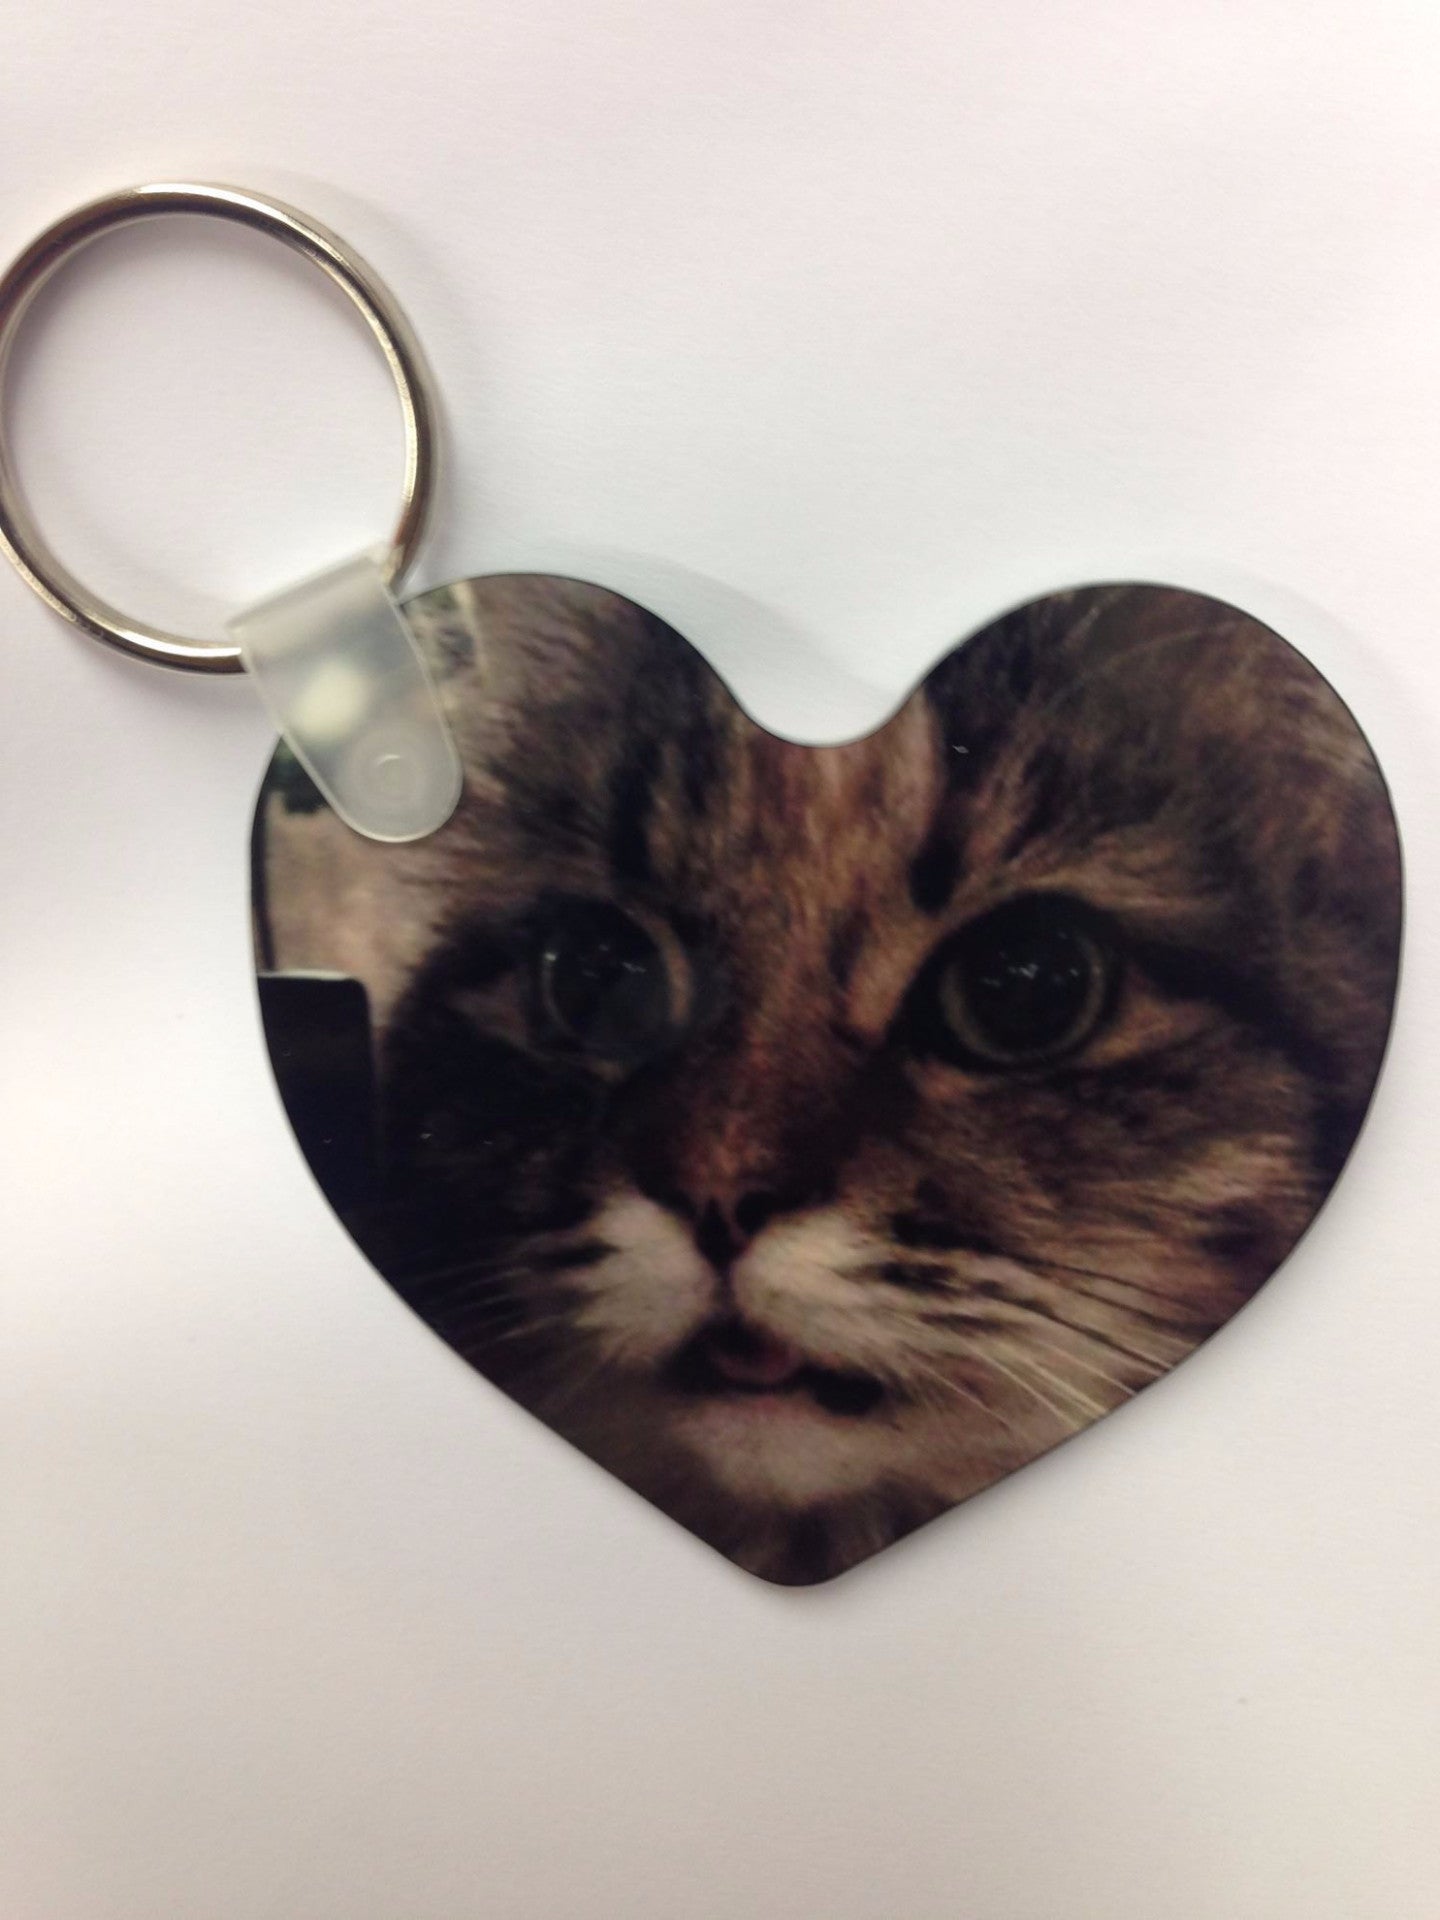 Personalized Custom Photo Heart Shaped Keychain Double Sided